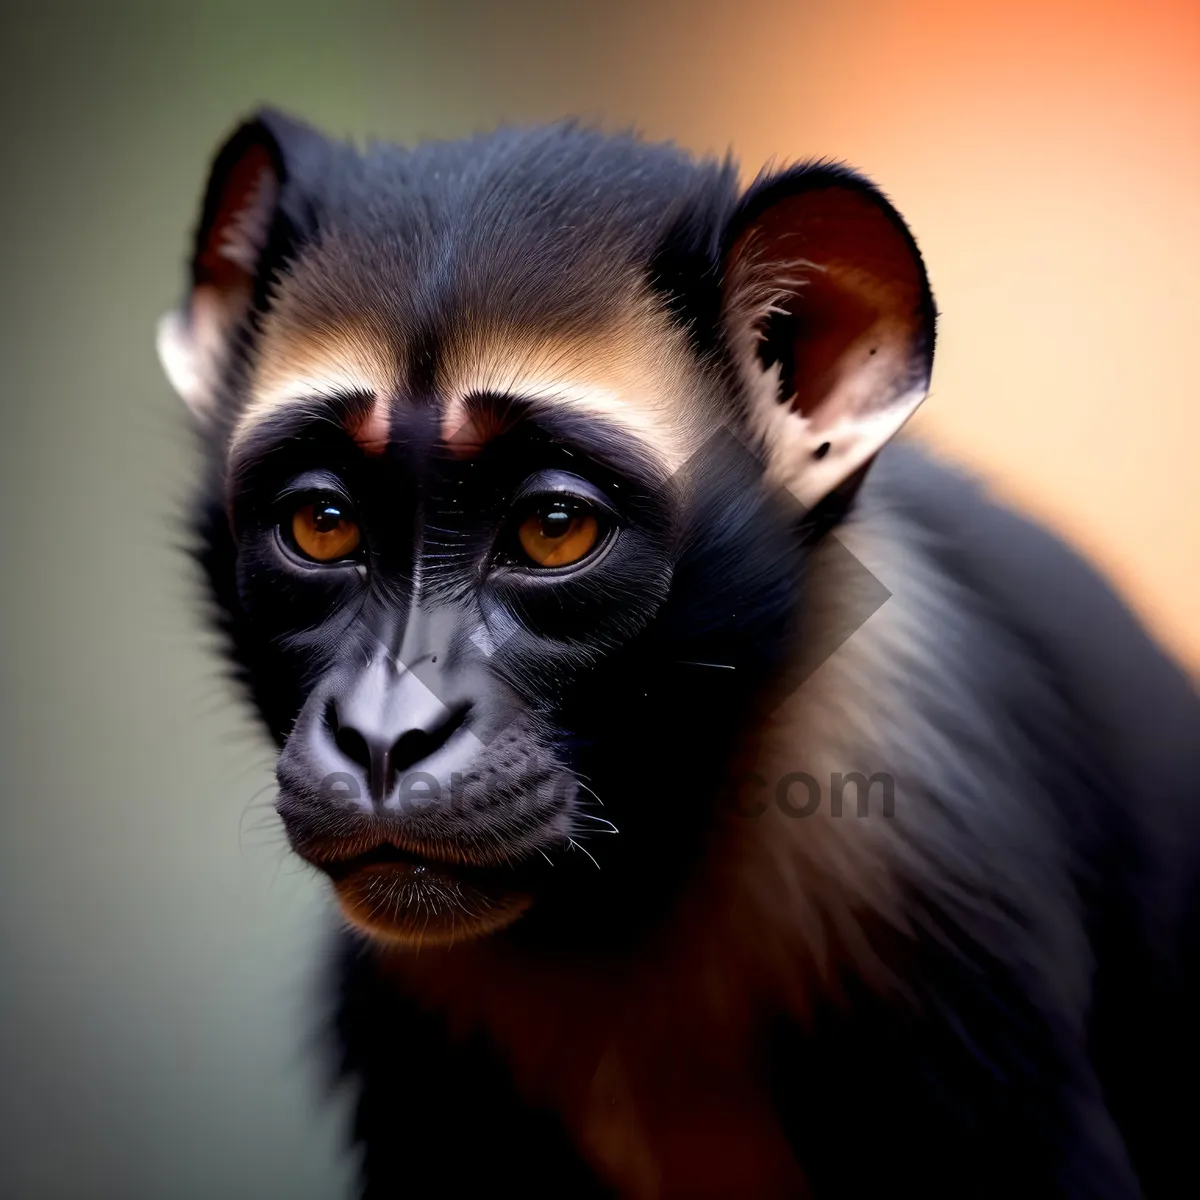 Picture of Adorable Baby Orangutan in the Wild